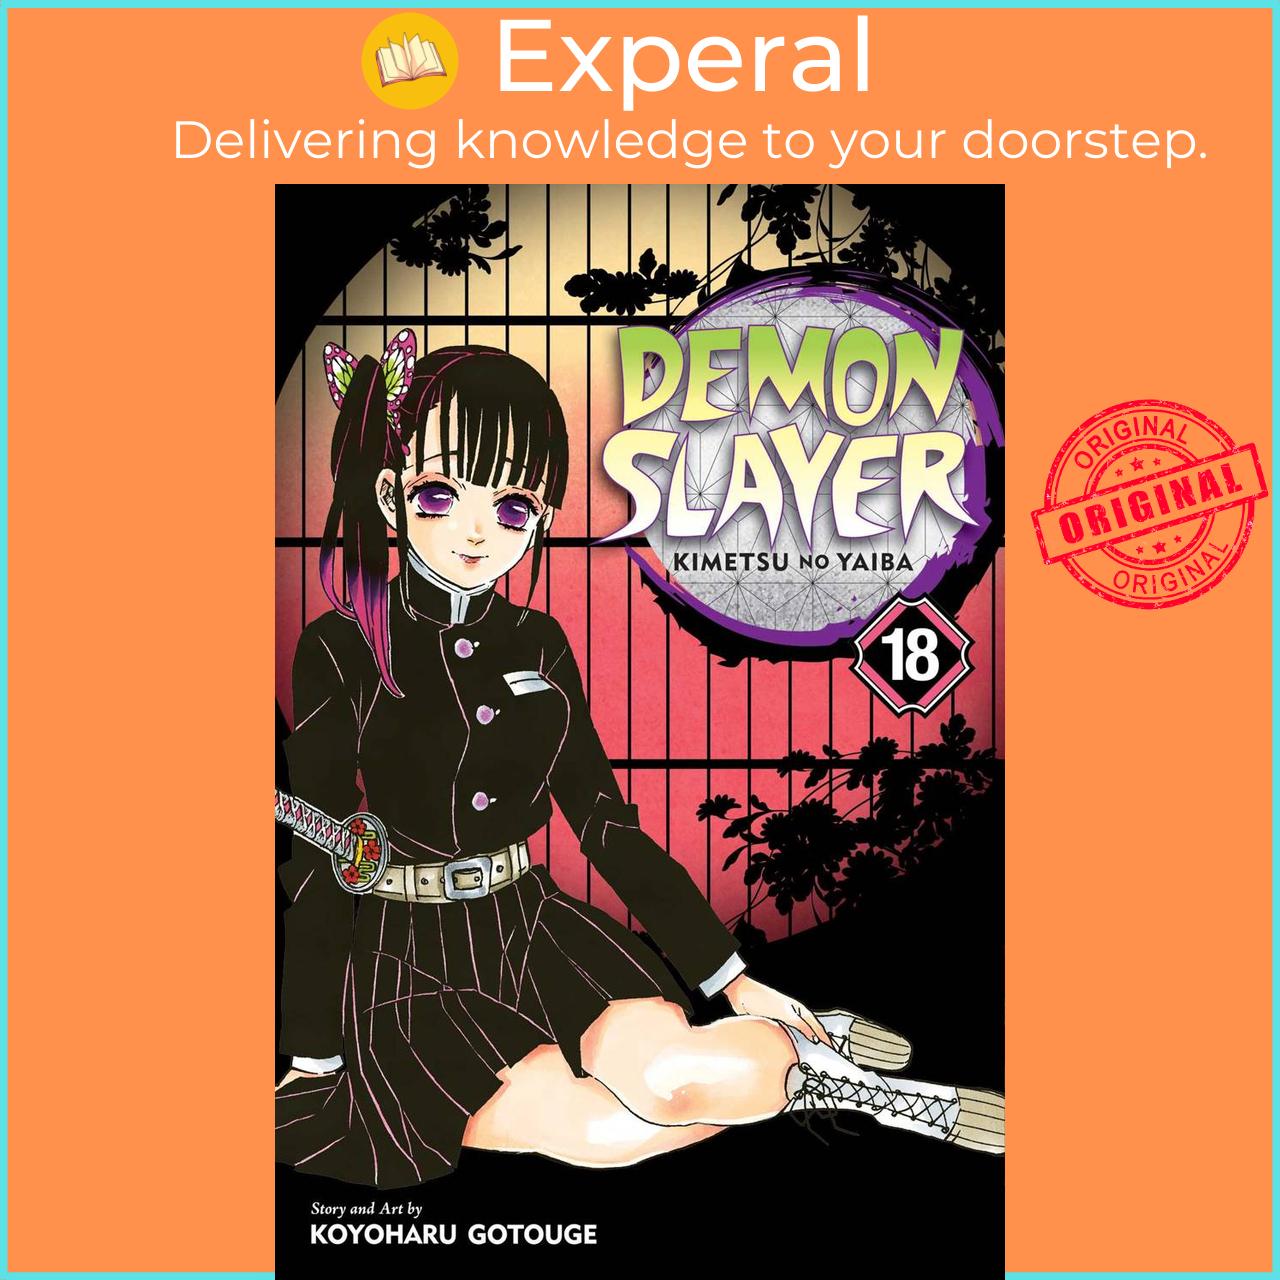 Sách - Demon Slayer: Kimetsu no Yaiba, Vol. 18 by Koyoharu Gotouge (UK edition, paperback)